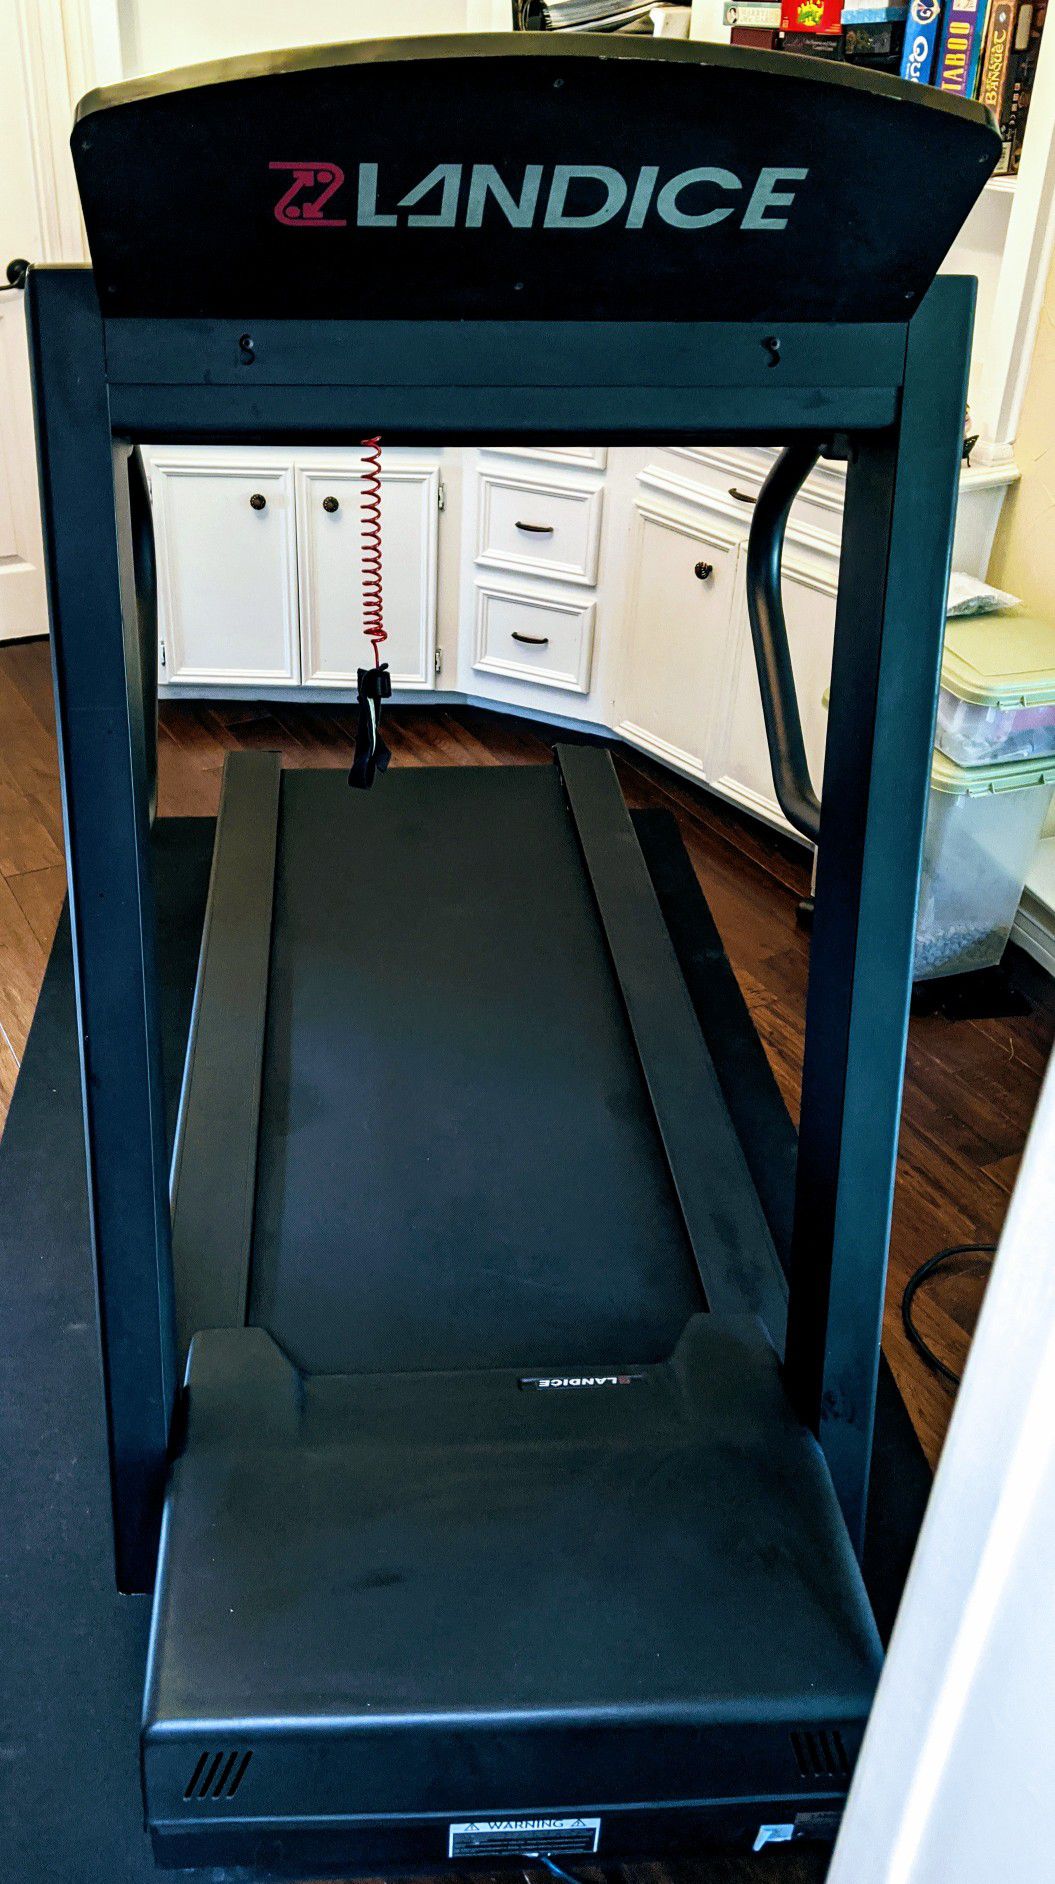 Landice l8 executive trainer treadmill in great shape